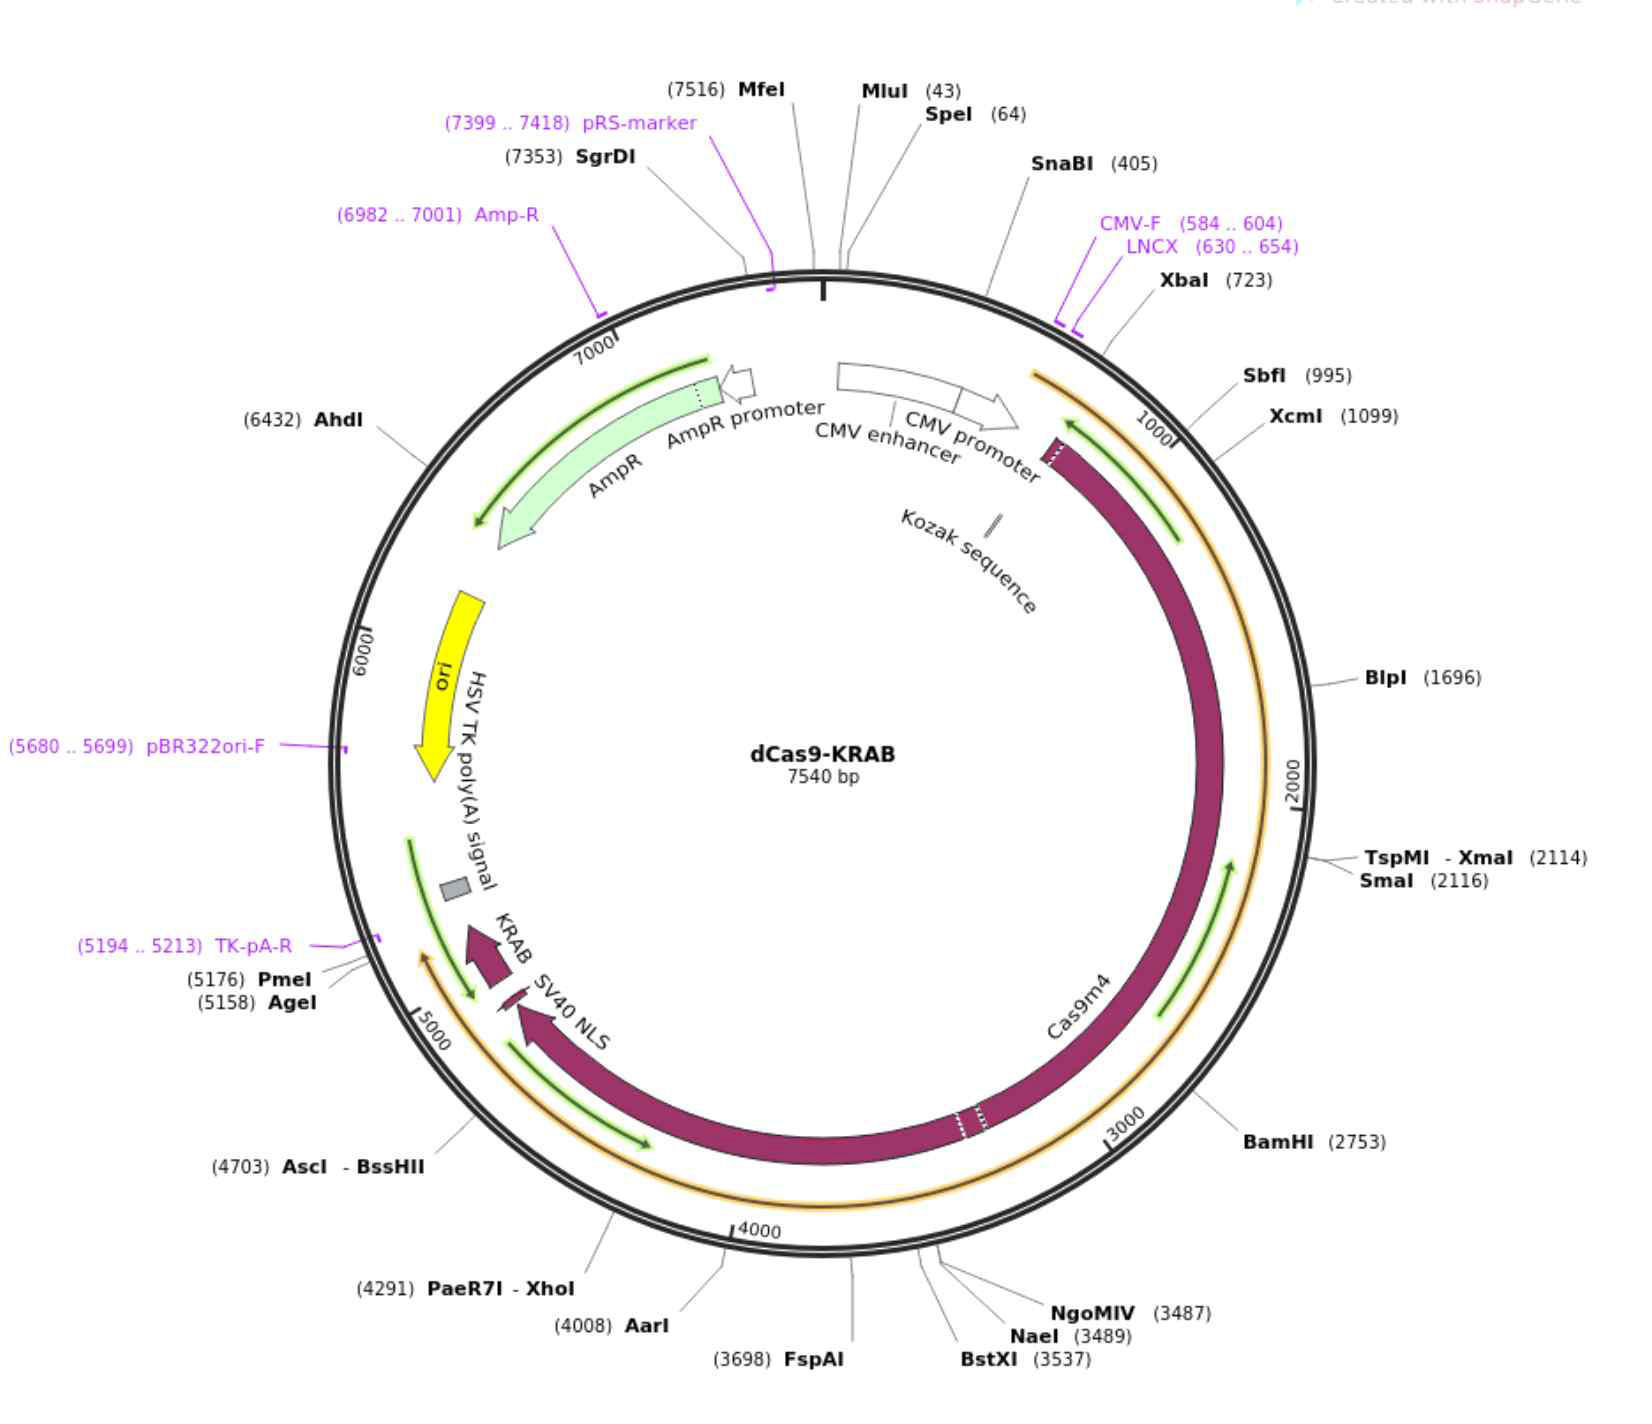 dCas9-KRAB plasmid